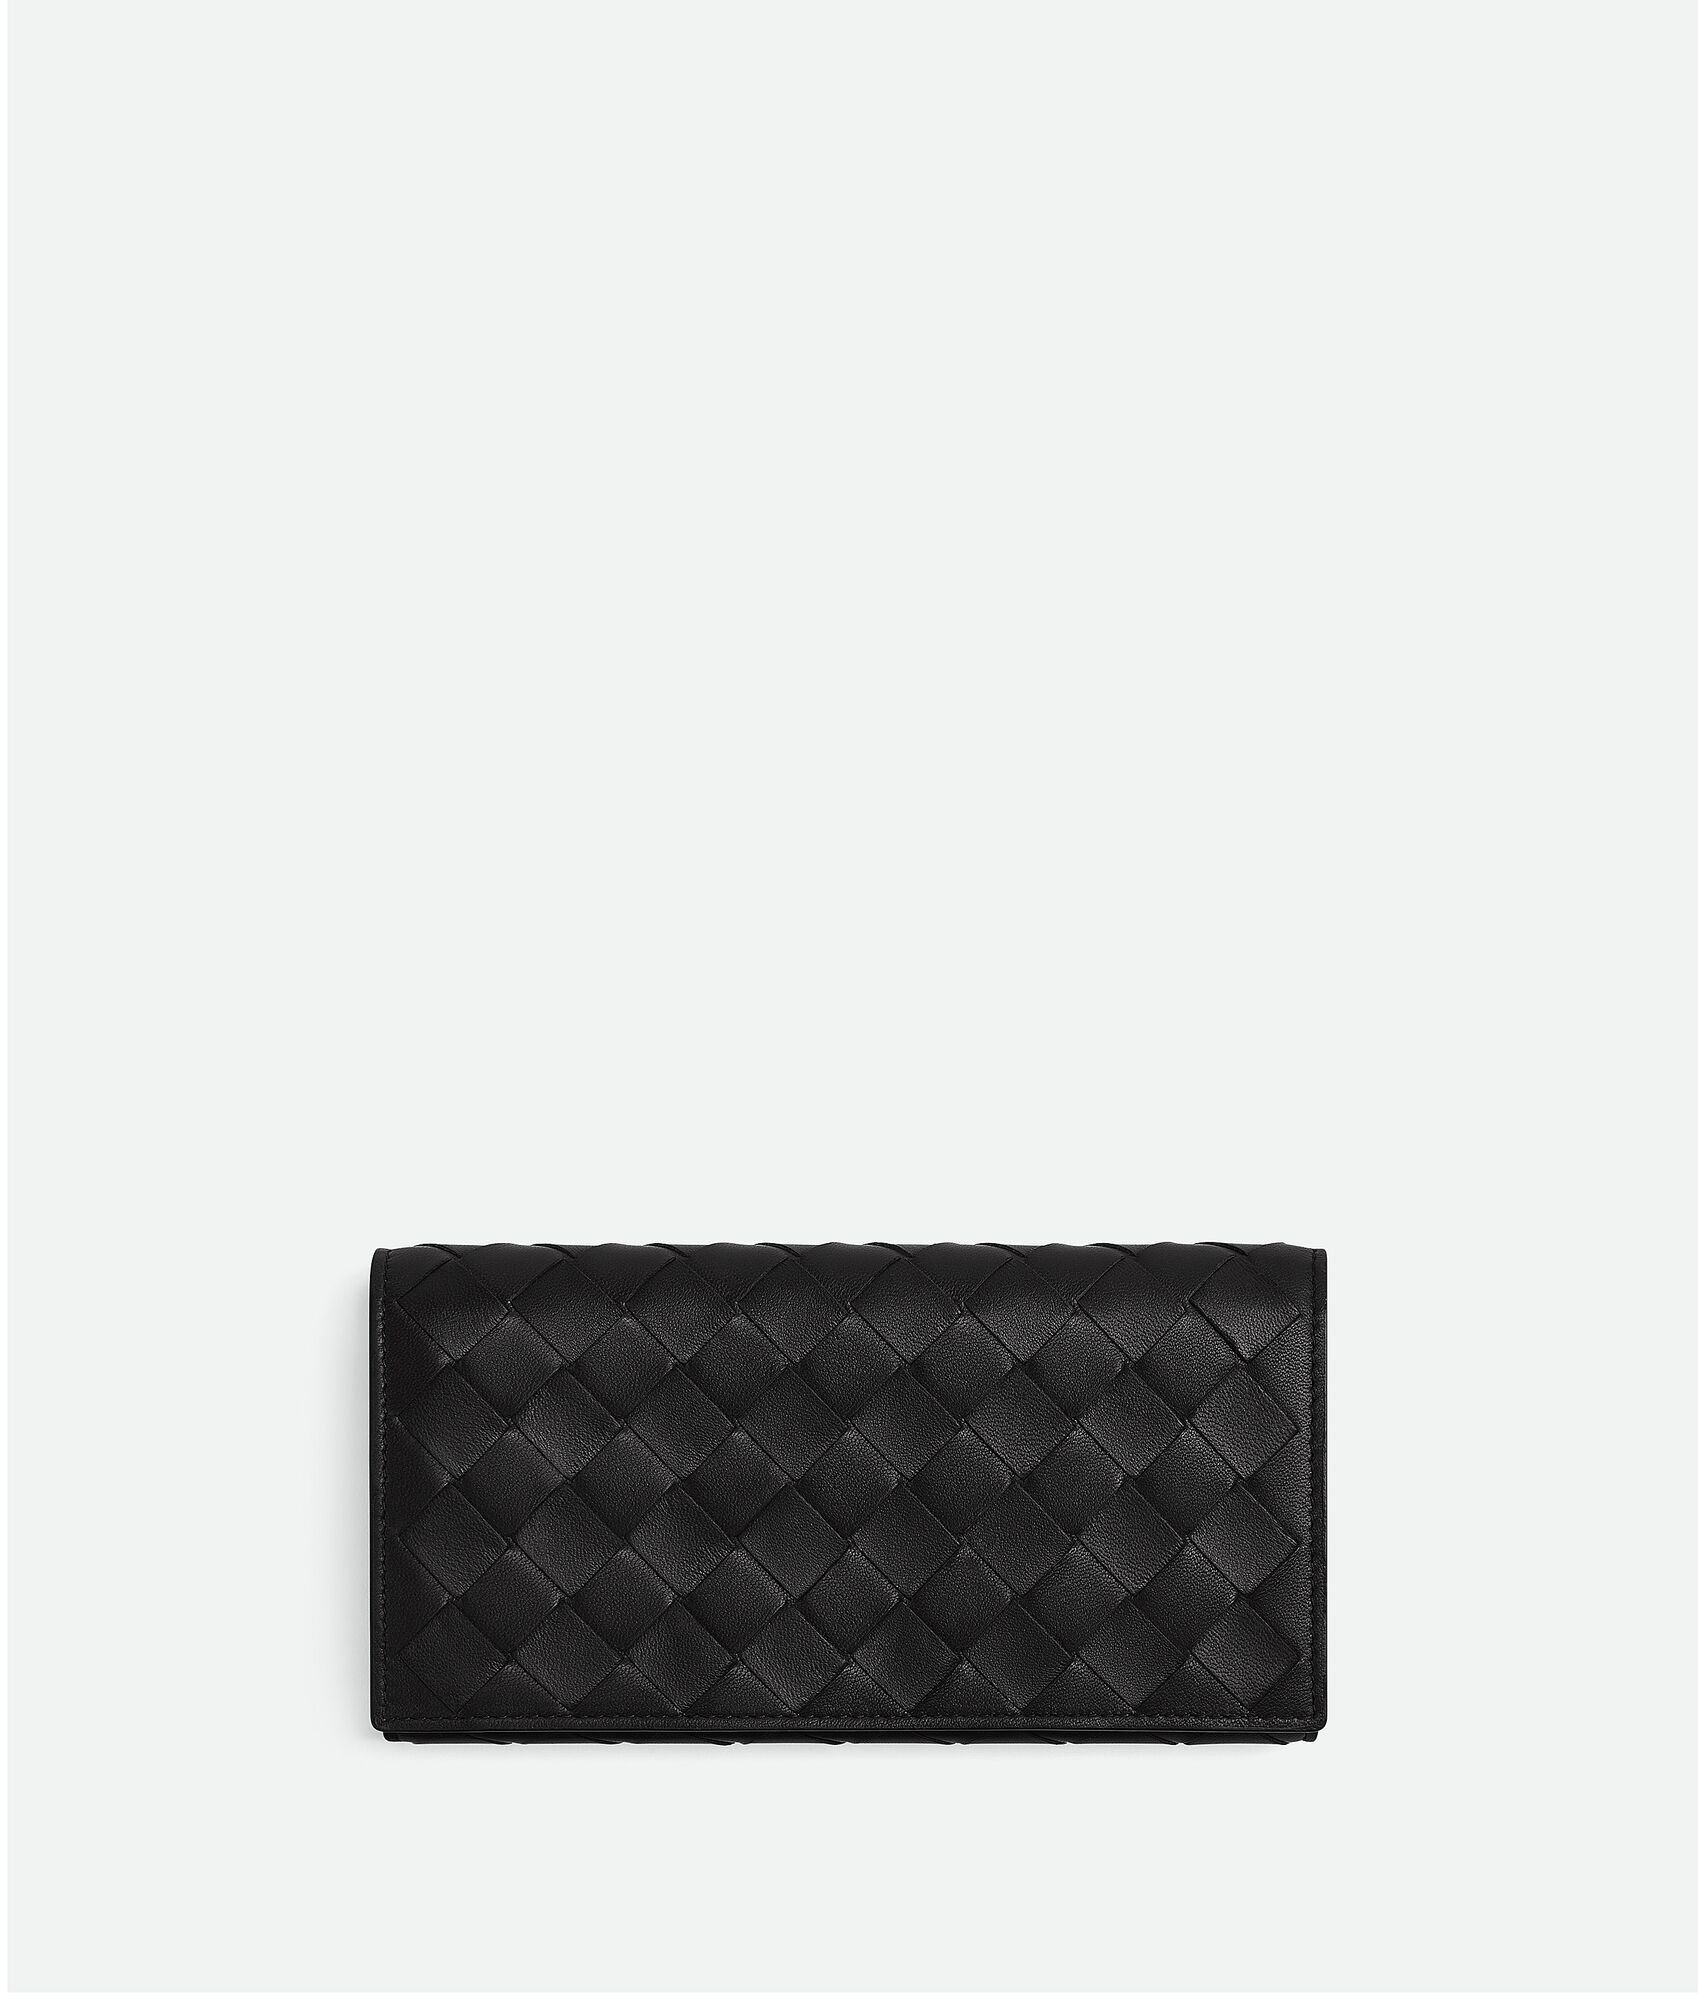 Bottega Veneta® Women's Intrecciato Large Flap Wallet in Black. Shop ...